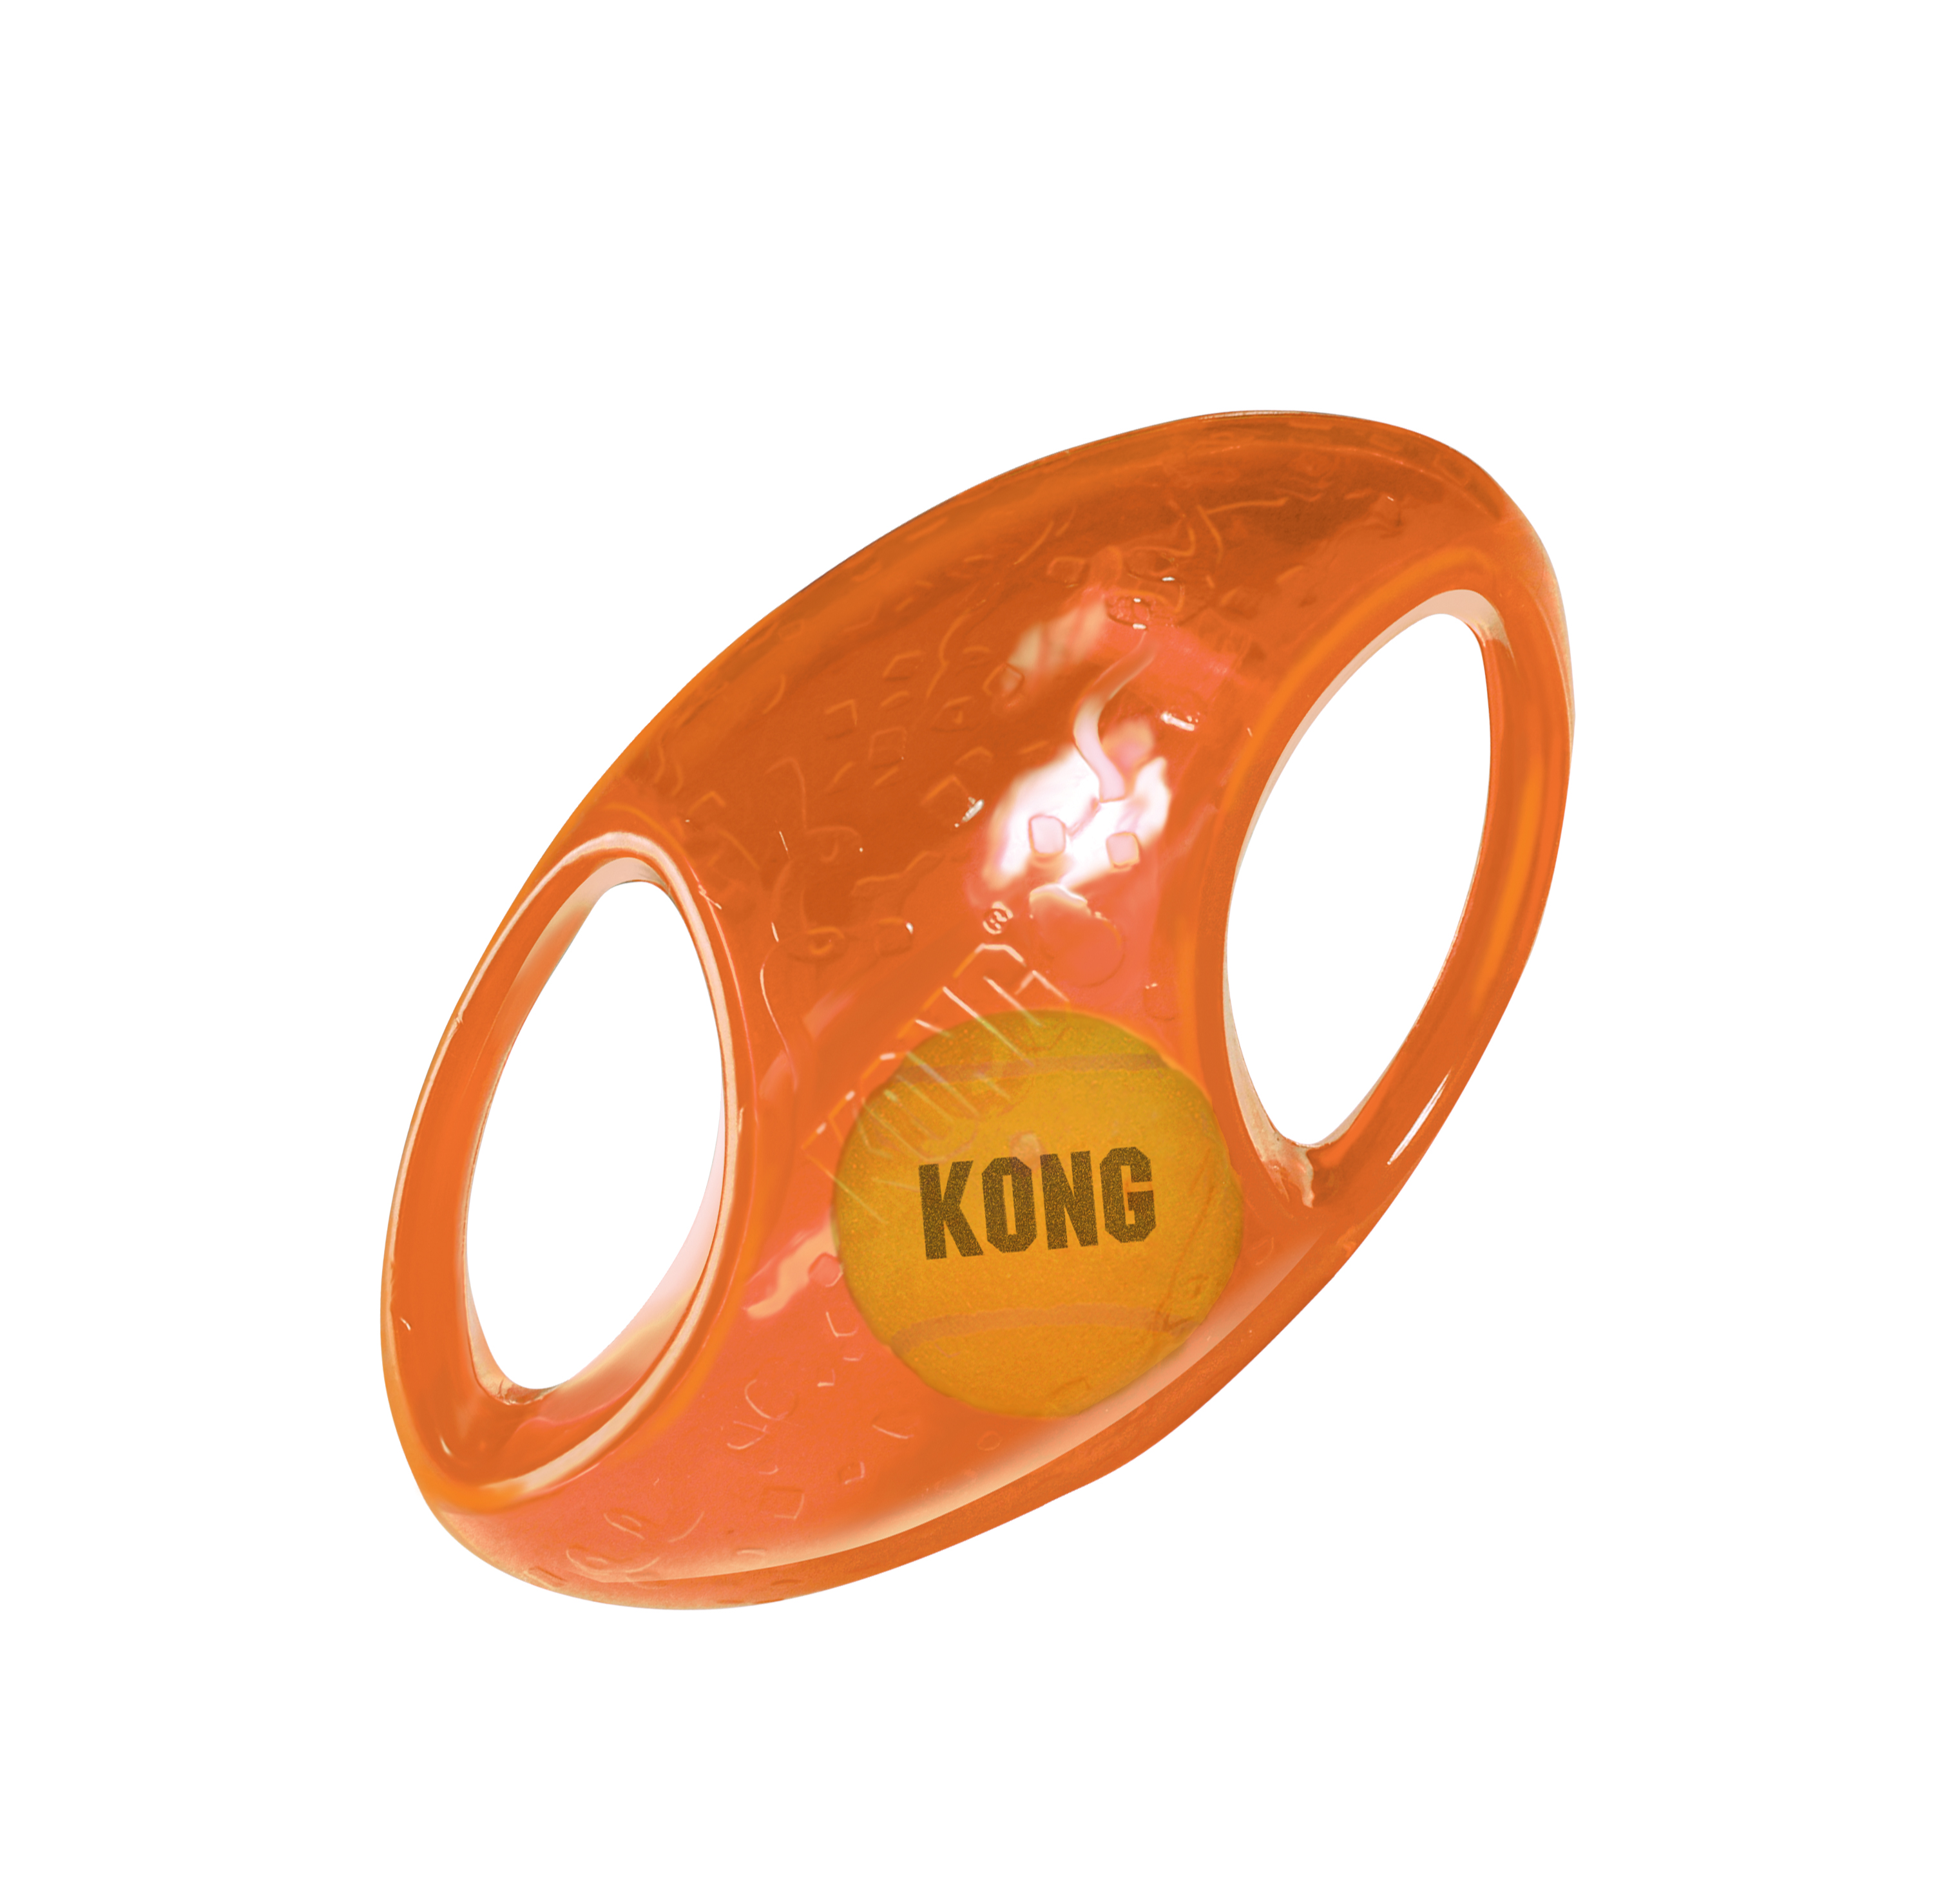 Kong jumbler football mixed colors - <Product shot>